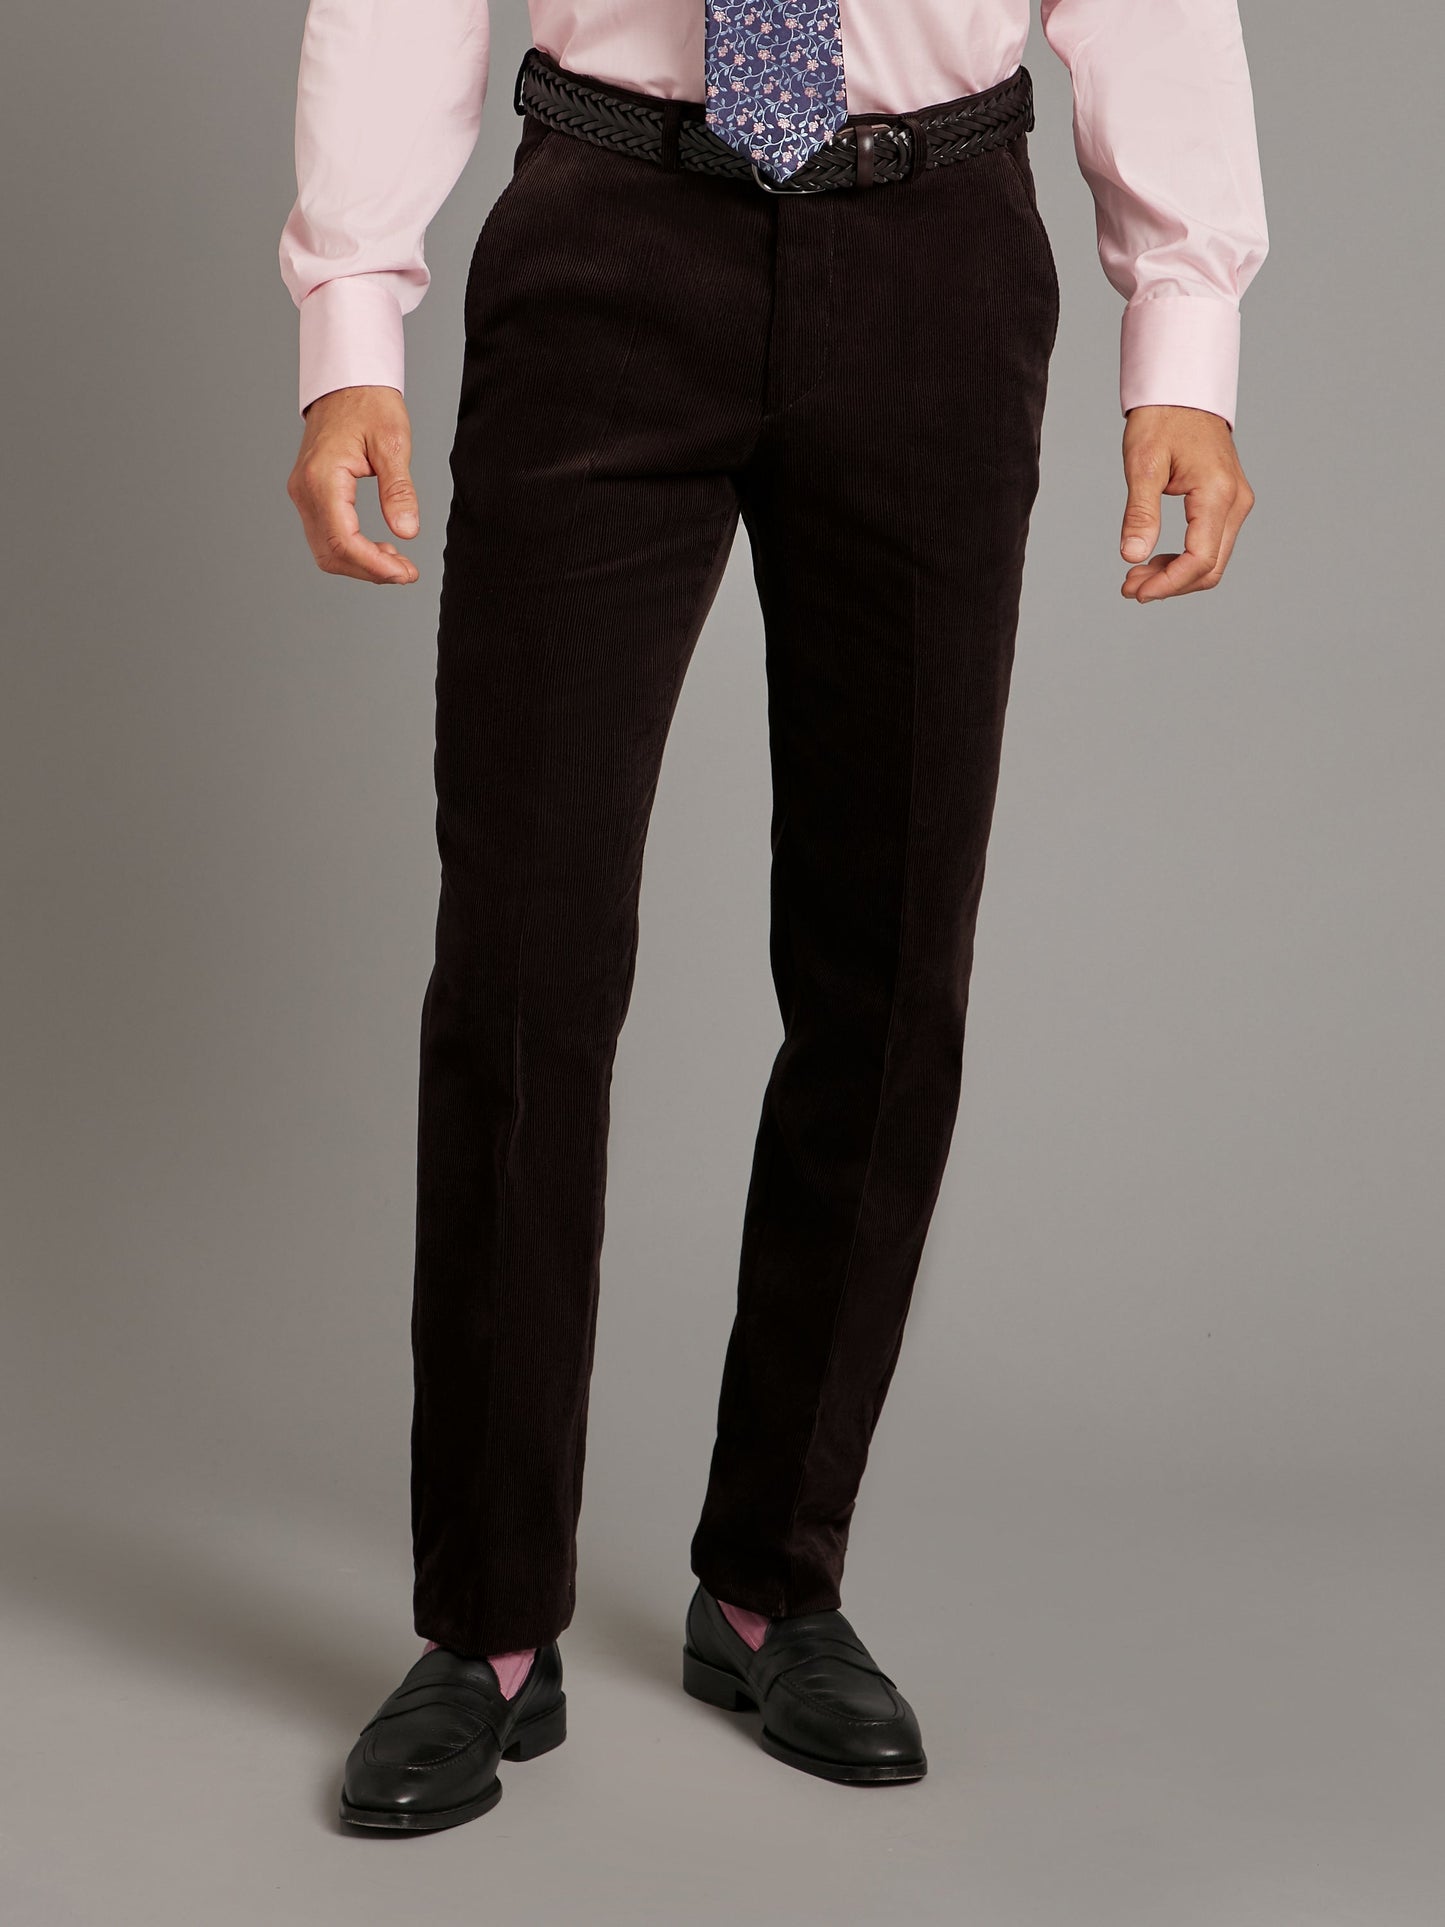 needlecord trousers dark brown 1